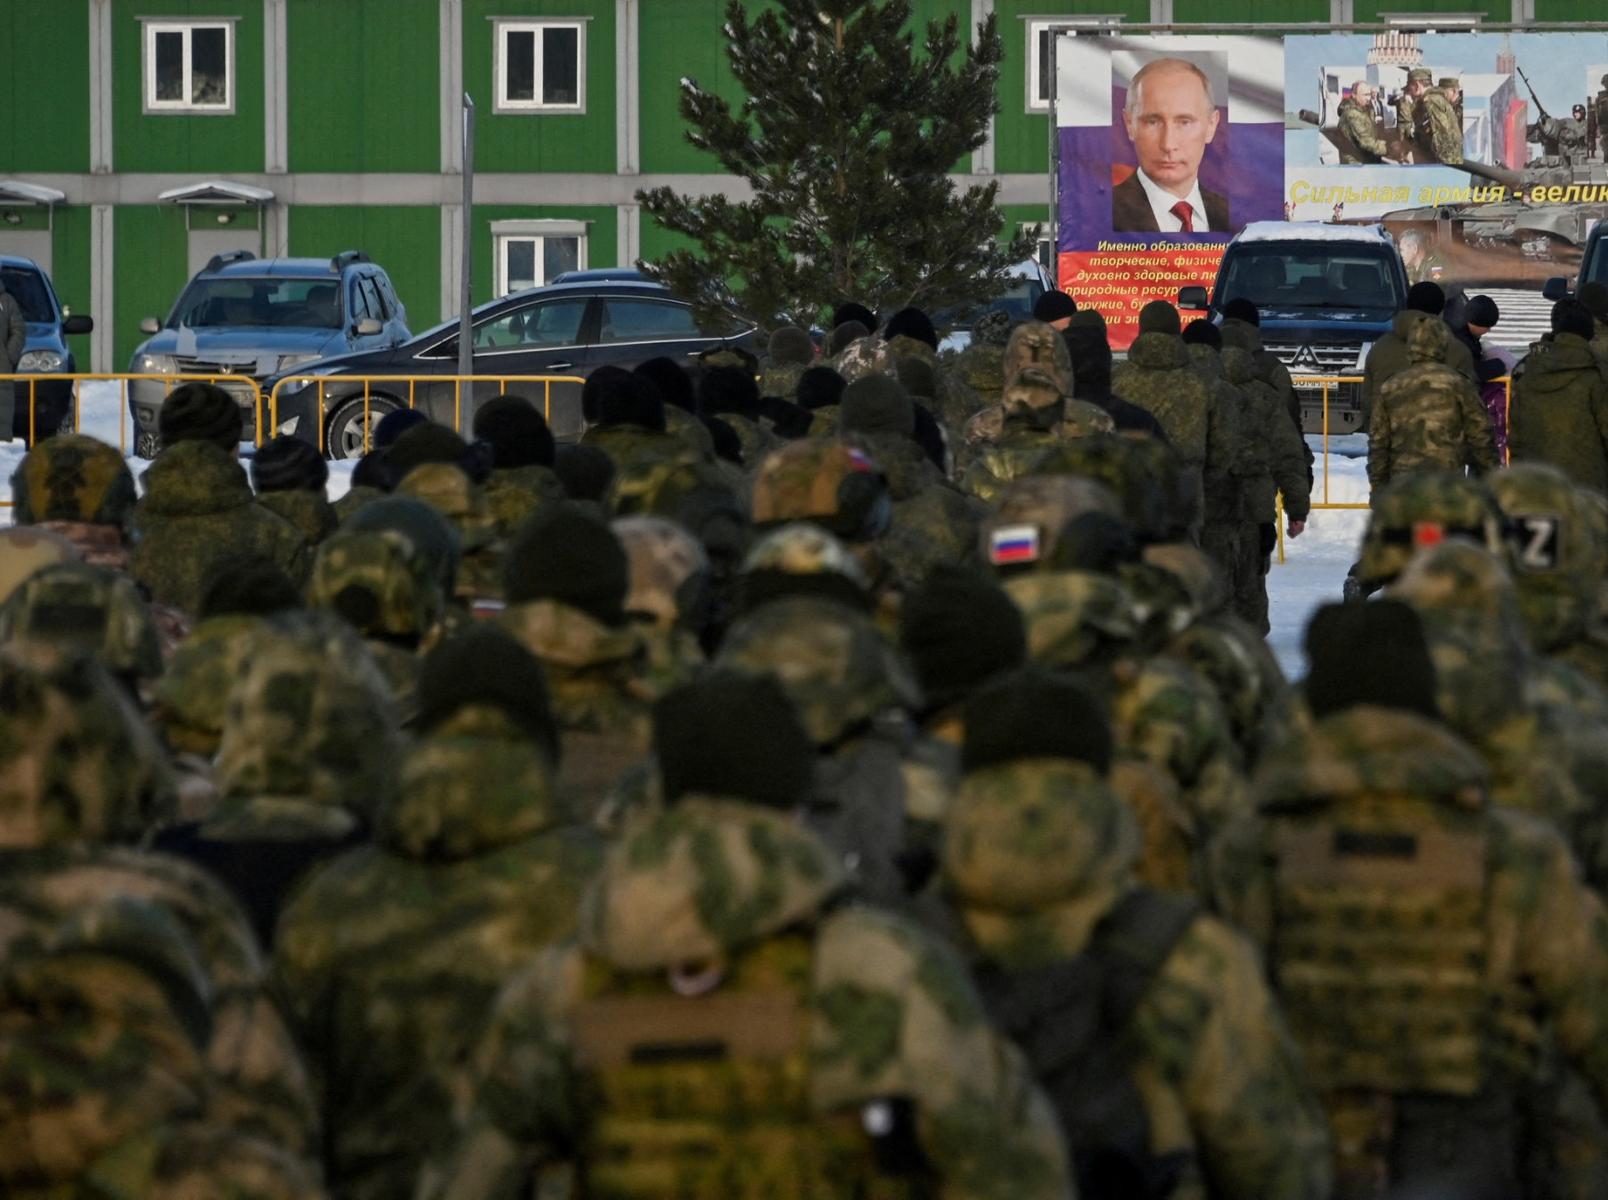 Russia's failing Ukraine invasion is exposing Putin's many